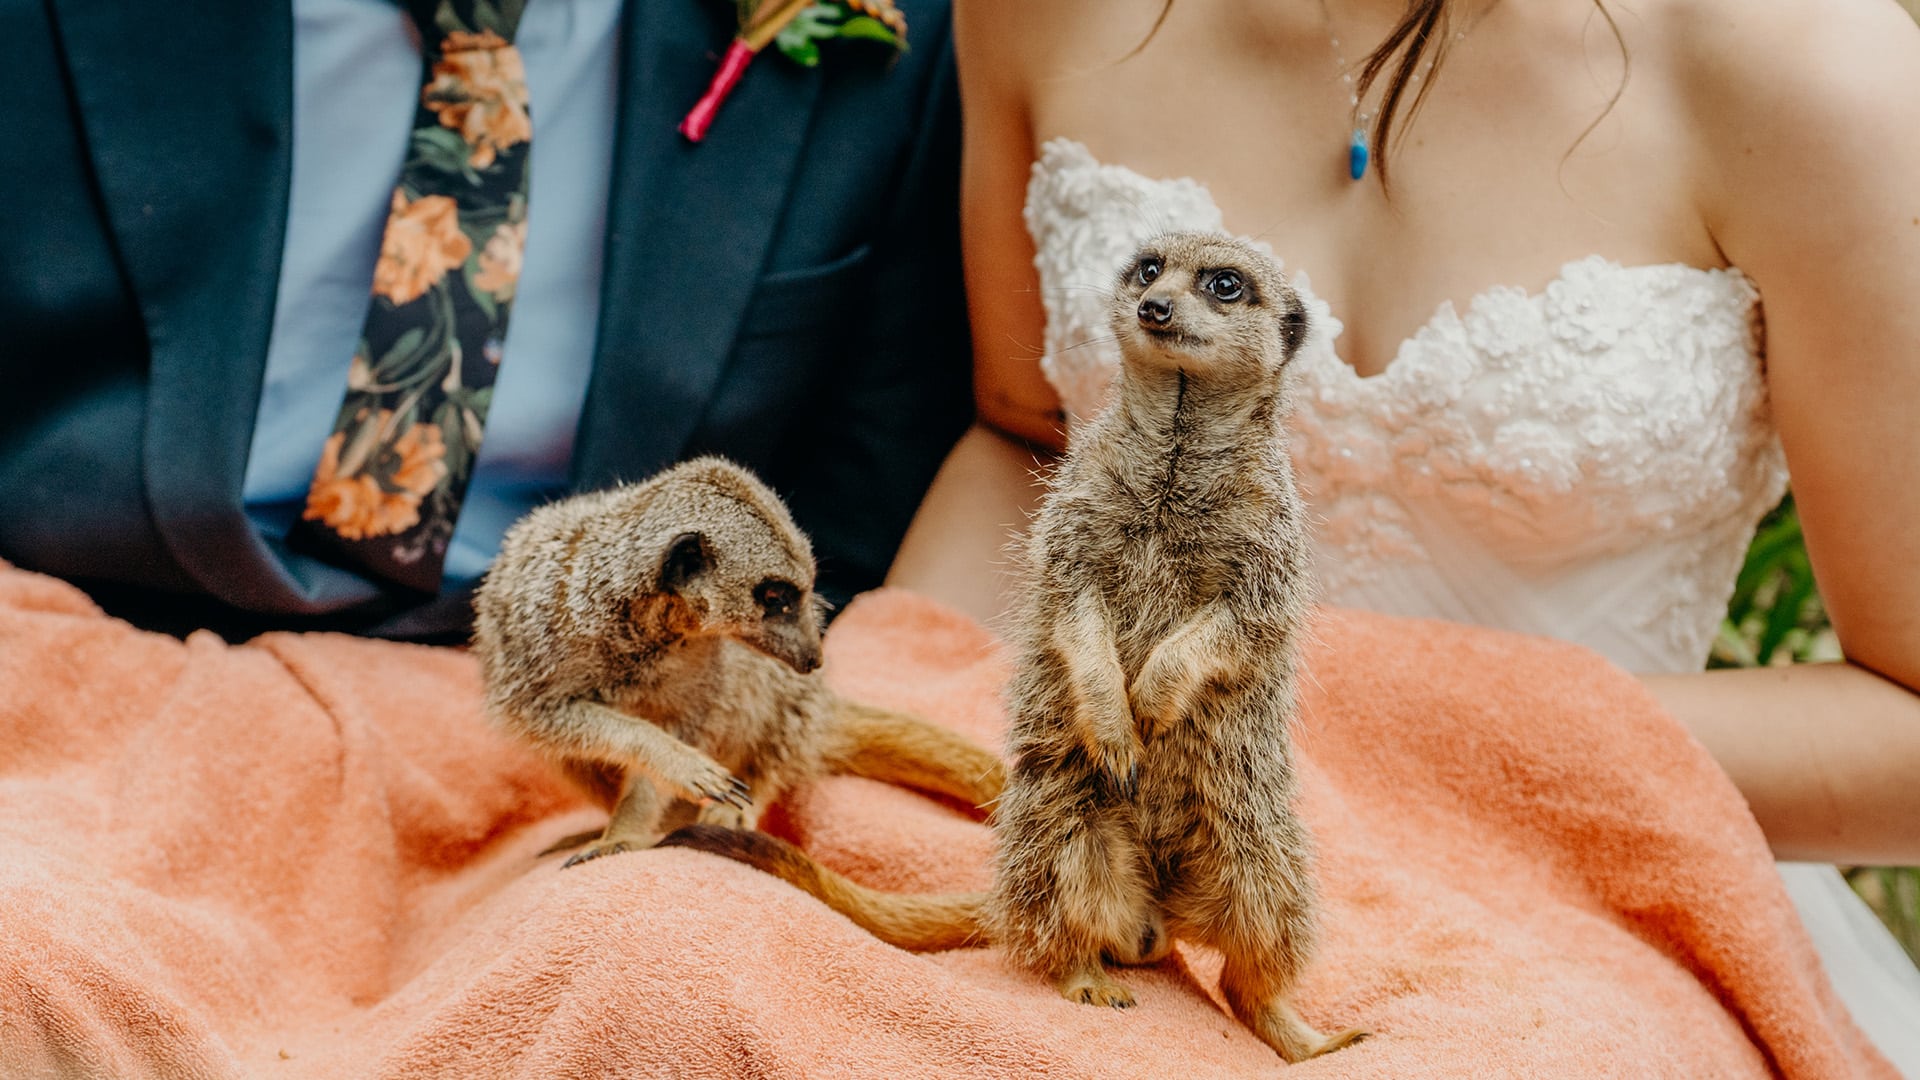 Animal Encounters: A Highlight of Zoo Weddings